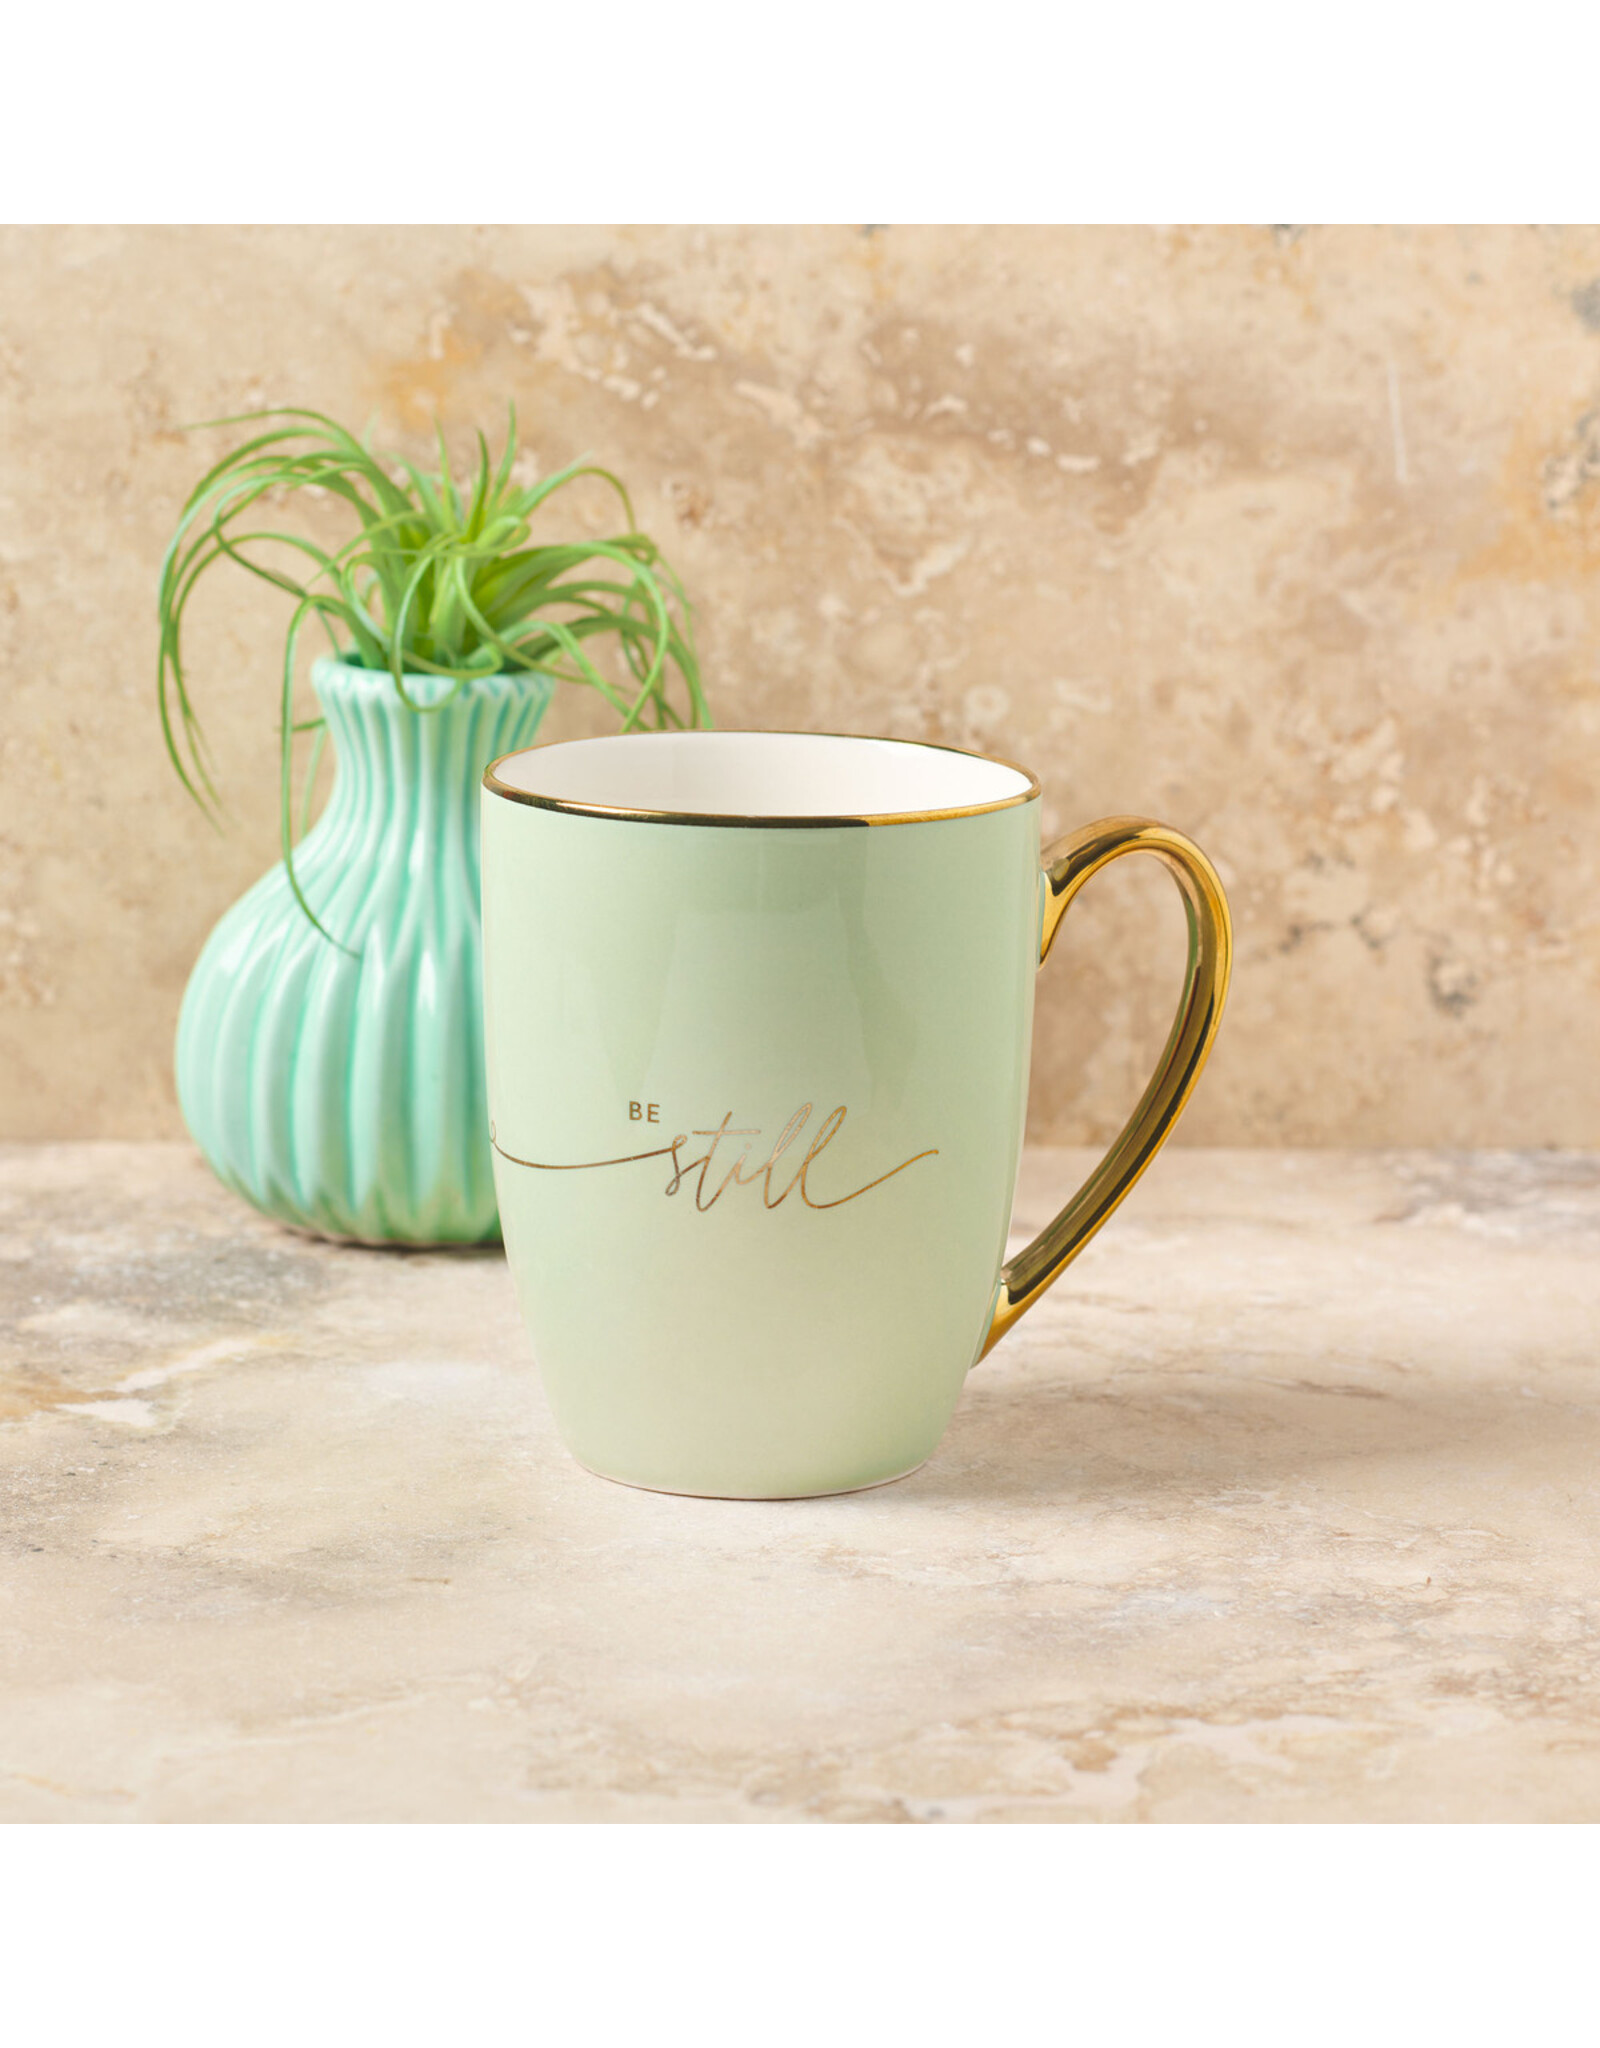 Christian Art Gifts Mug - Be Still, Soft Green & Gold Ceramic